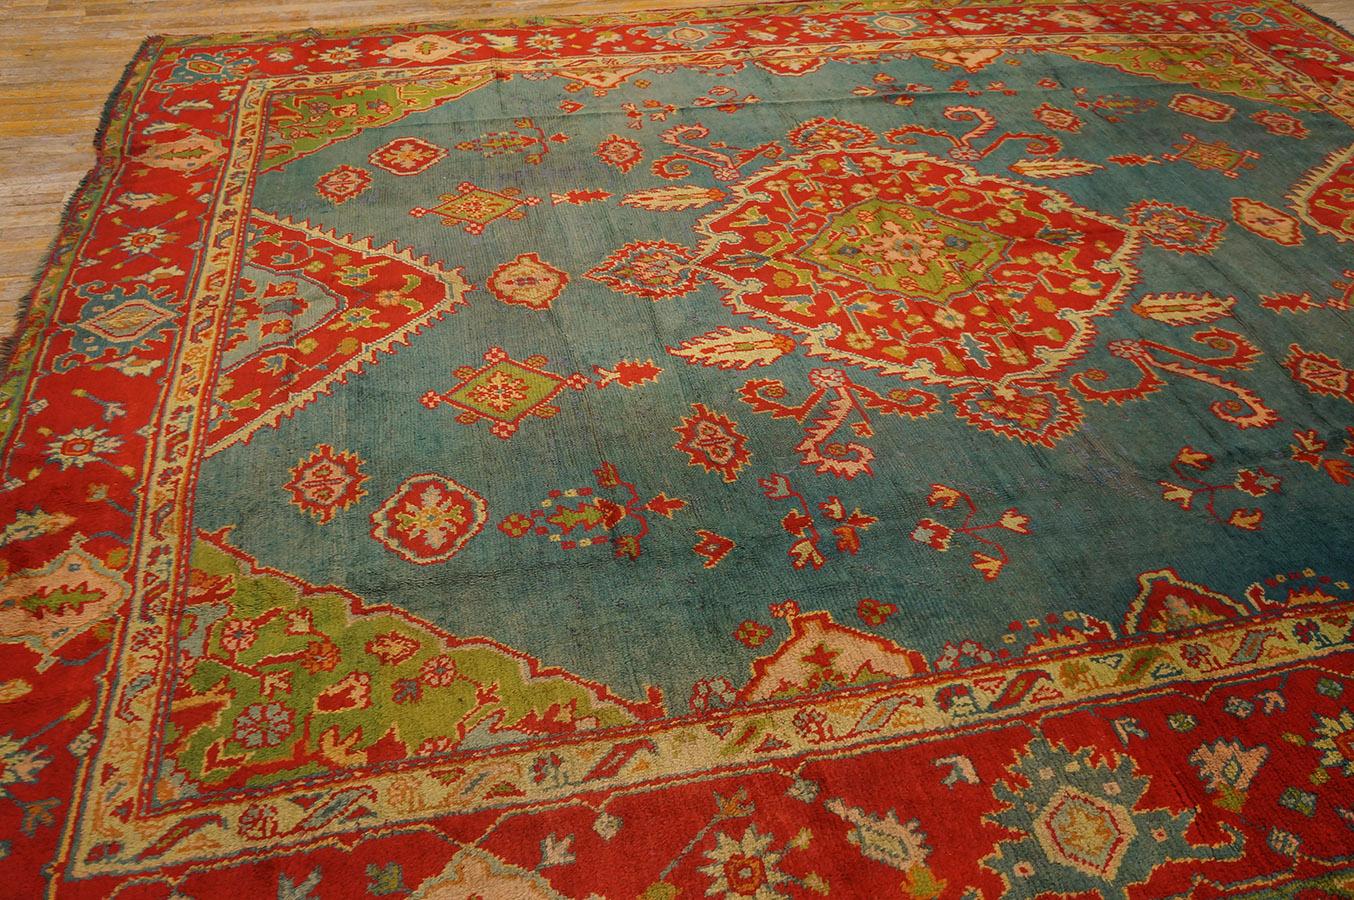 Late 19th Century Turkish Oushak Carpet ( 11' 2'' x 13' 1'' - 340 x 398 cm ) For Sale 6